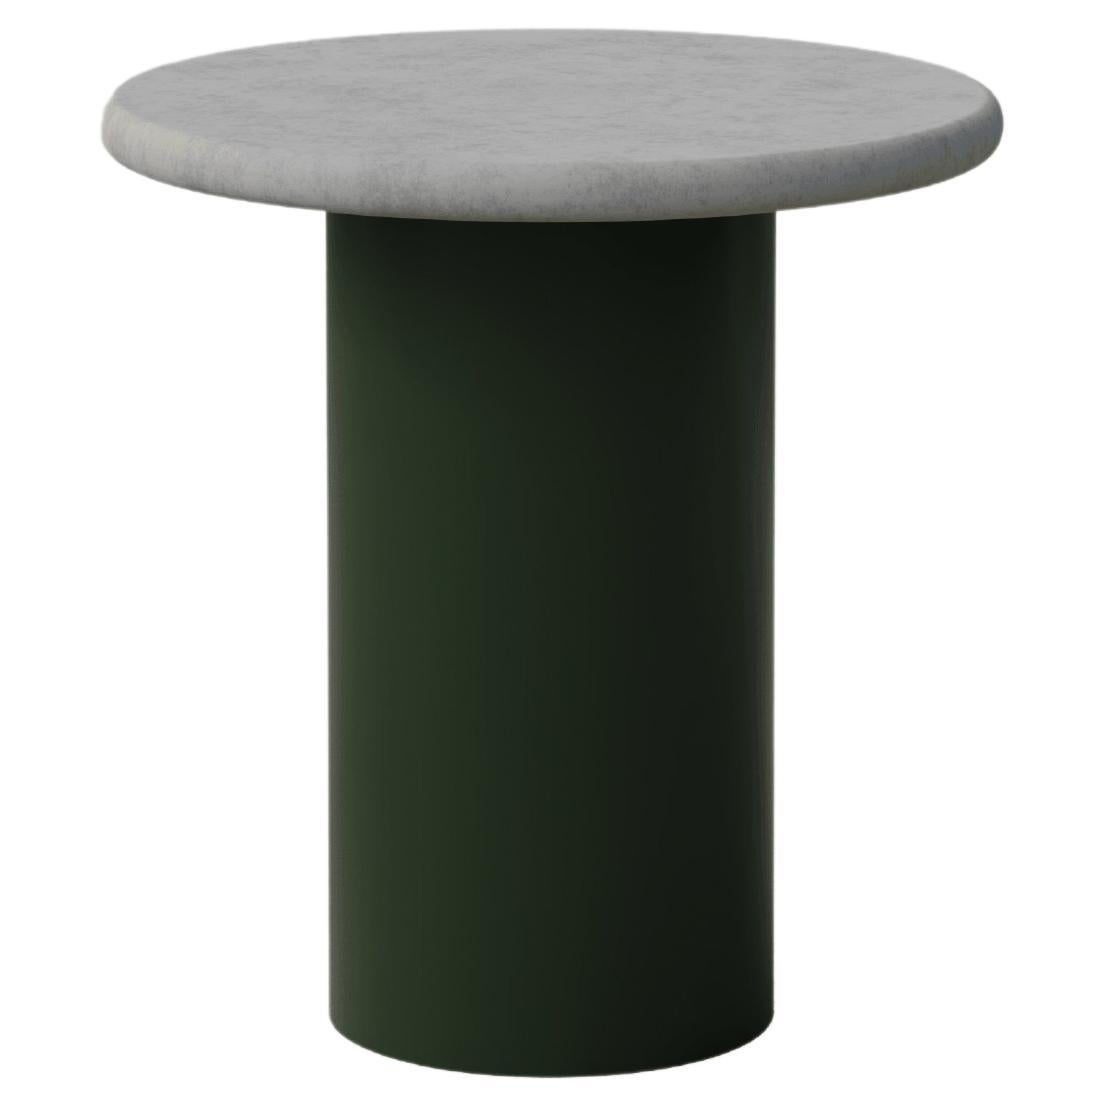 Raindrop Coffee Table, 400, Microcrete / Moss Green For Sale